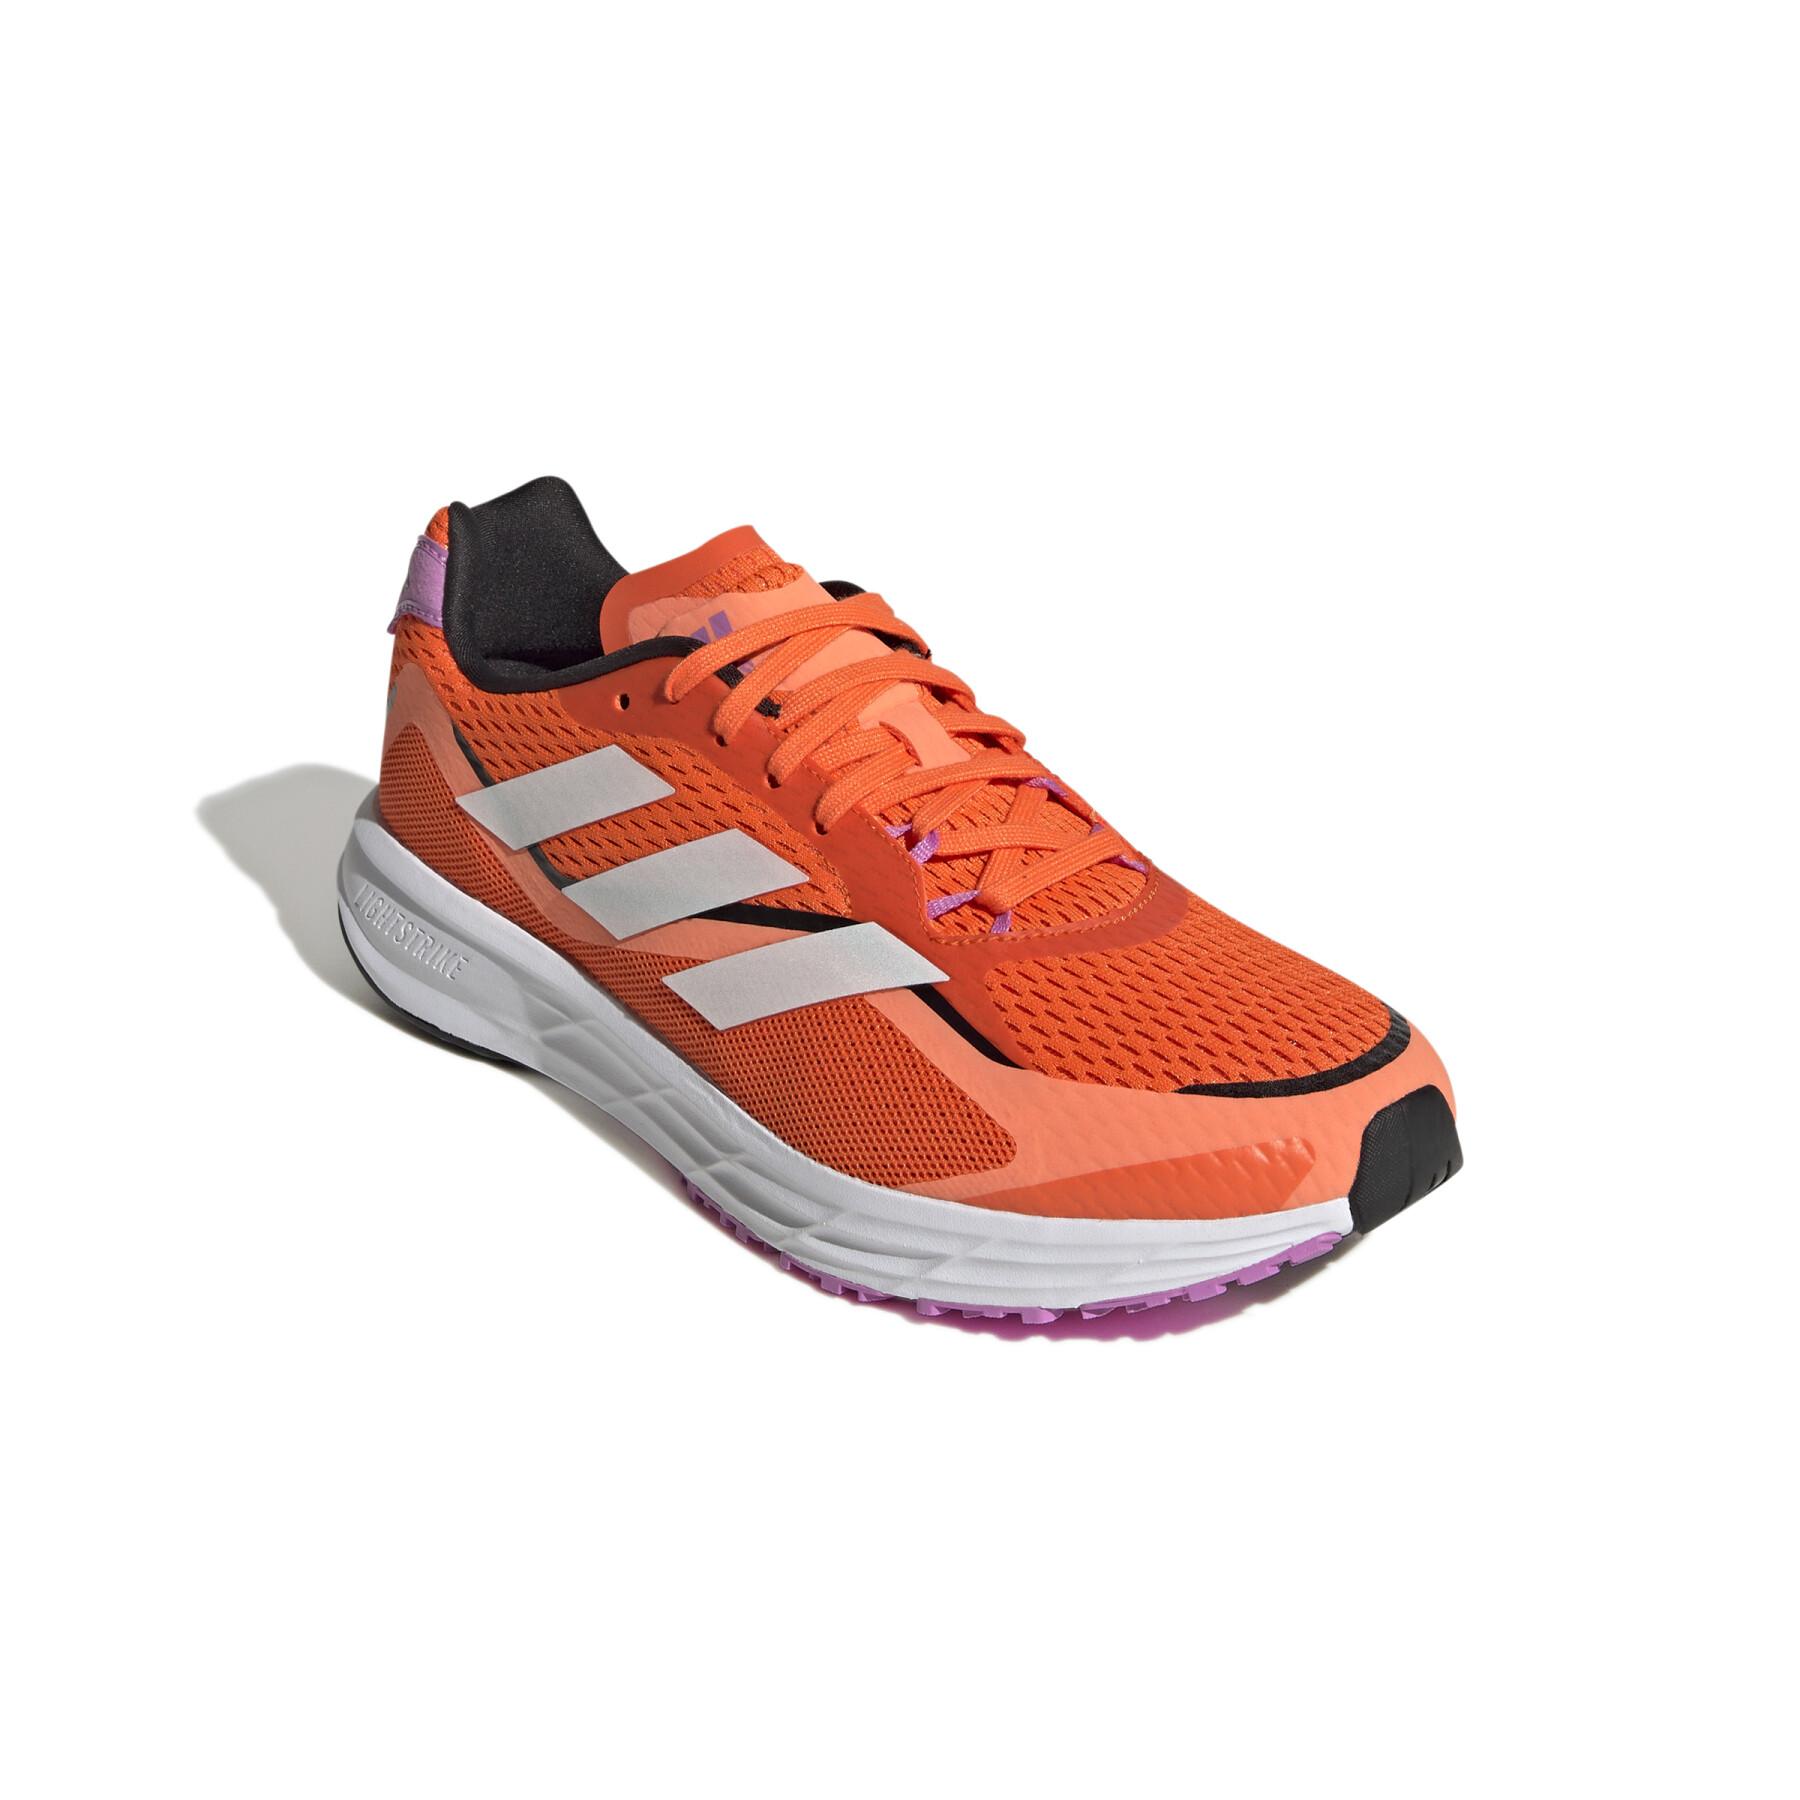 Running shoes adidas SL20.3